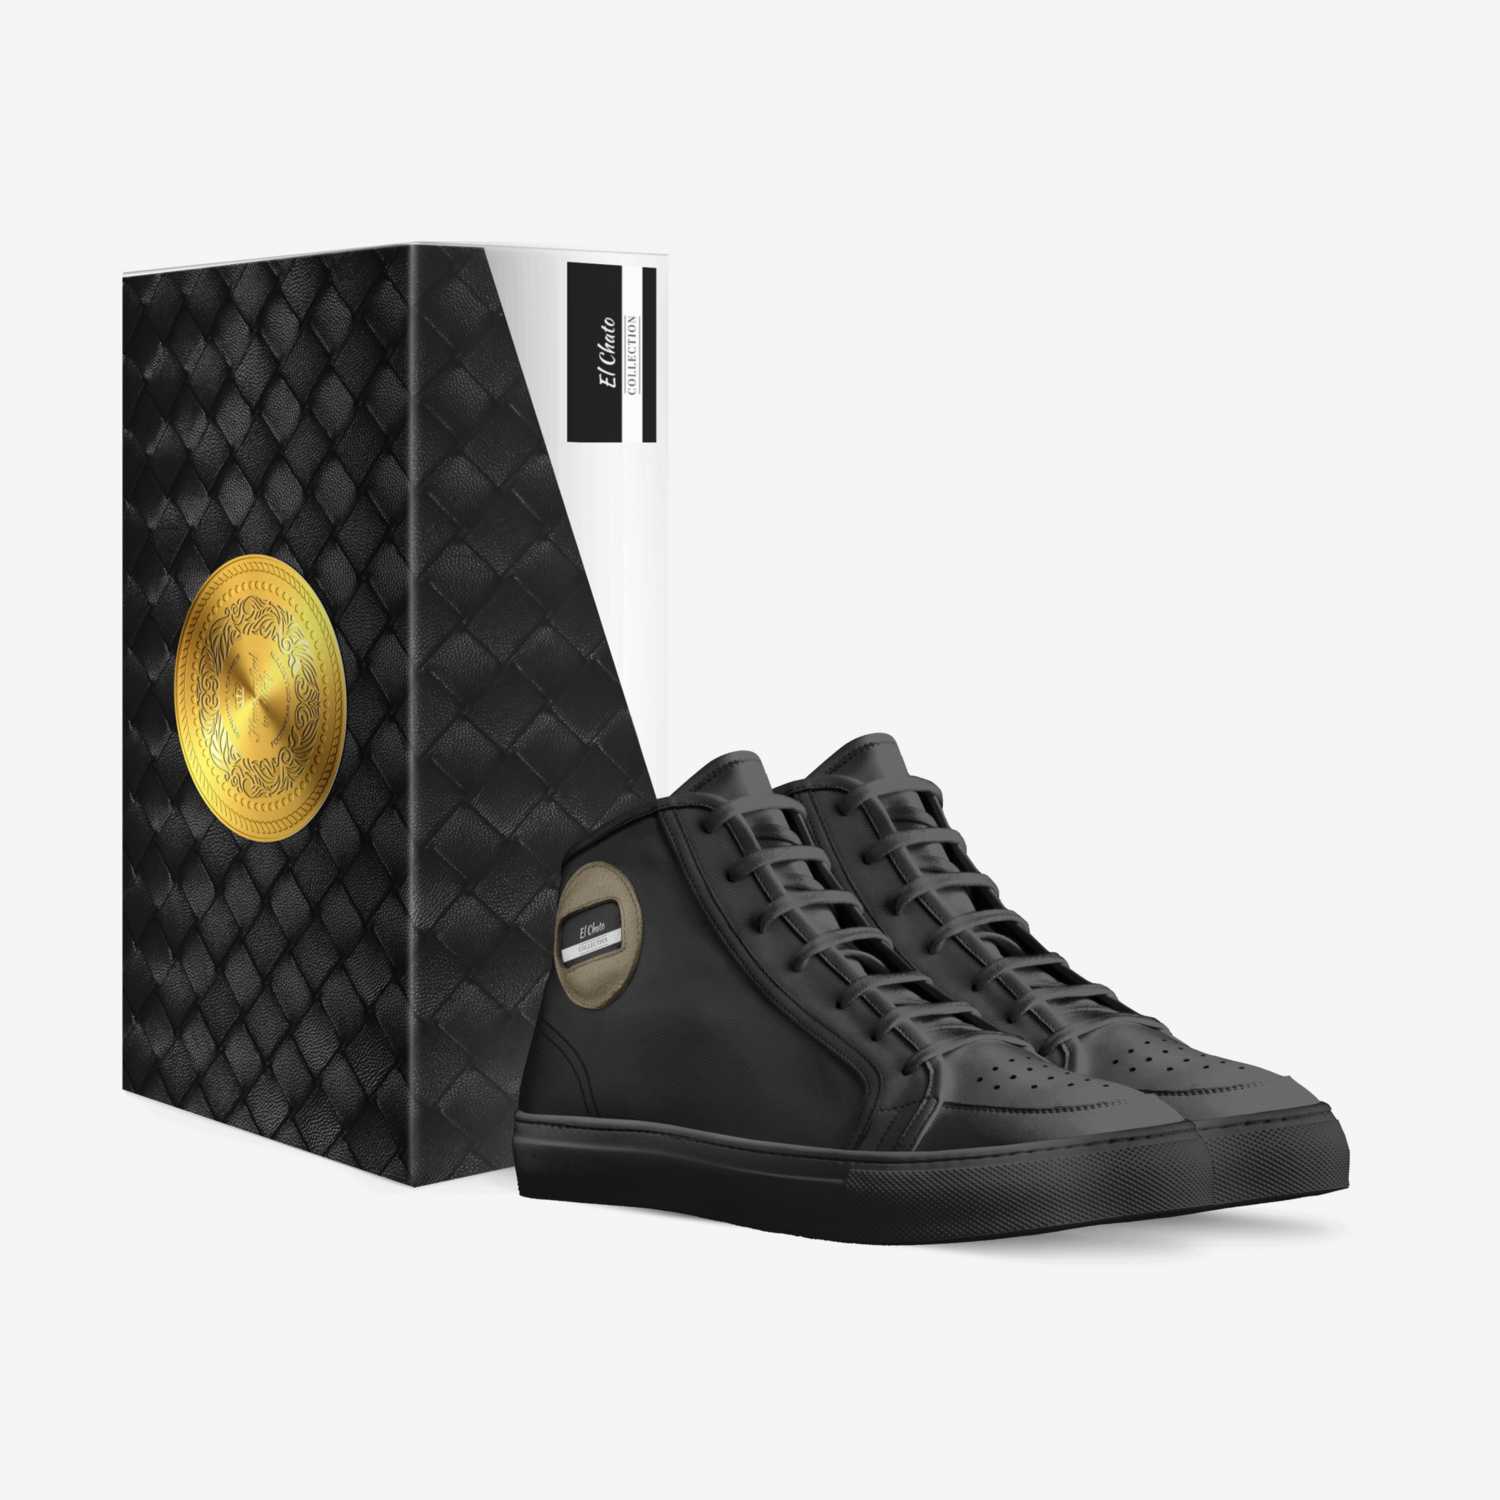 El Chato custom made in Italy shoes by Marcelino Quebrado | Box view